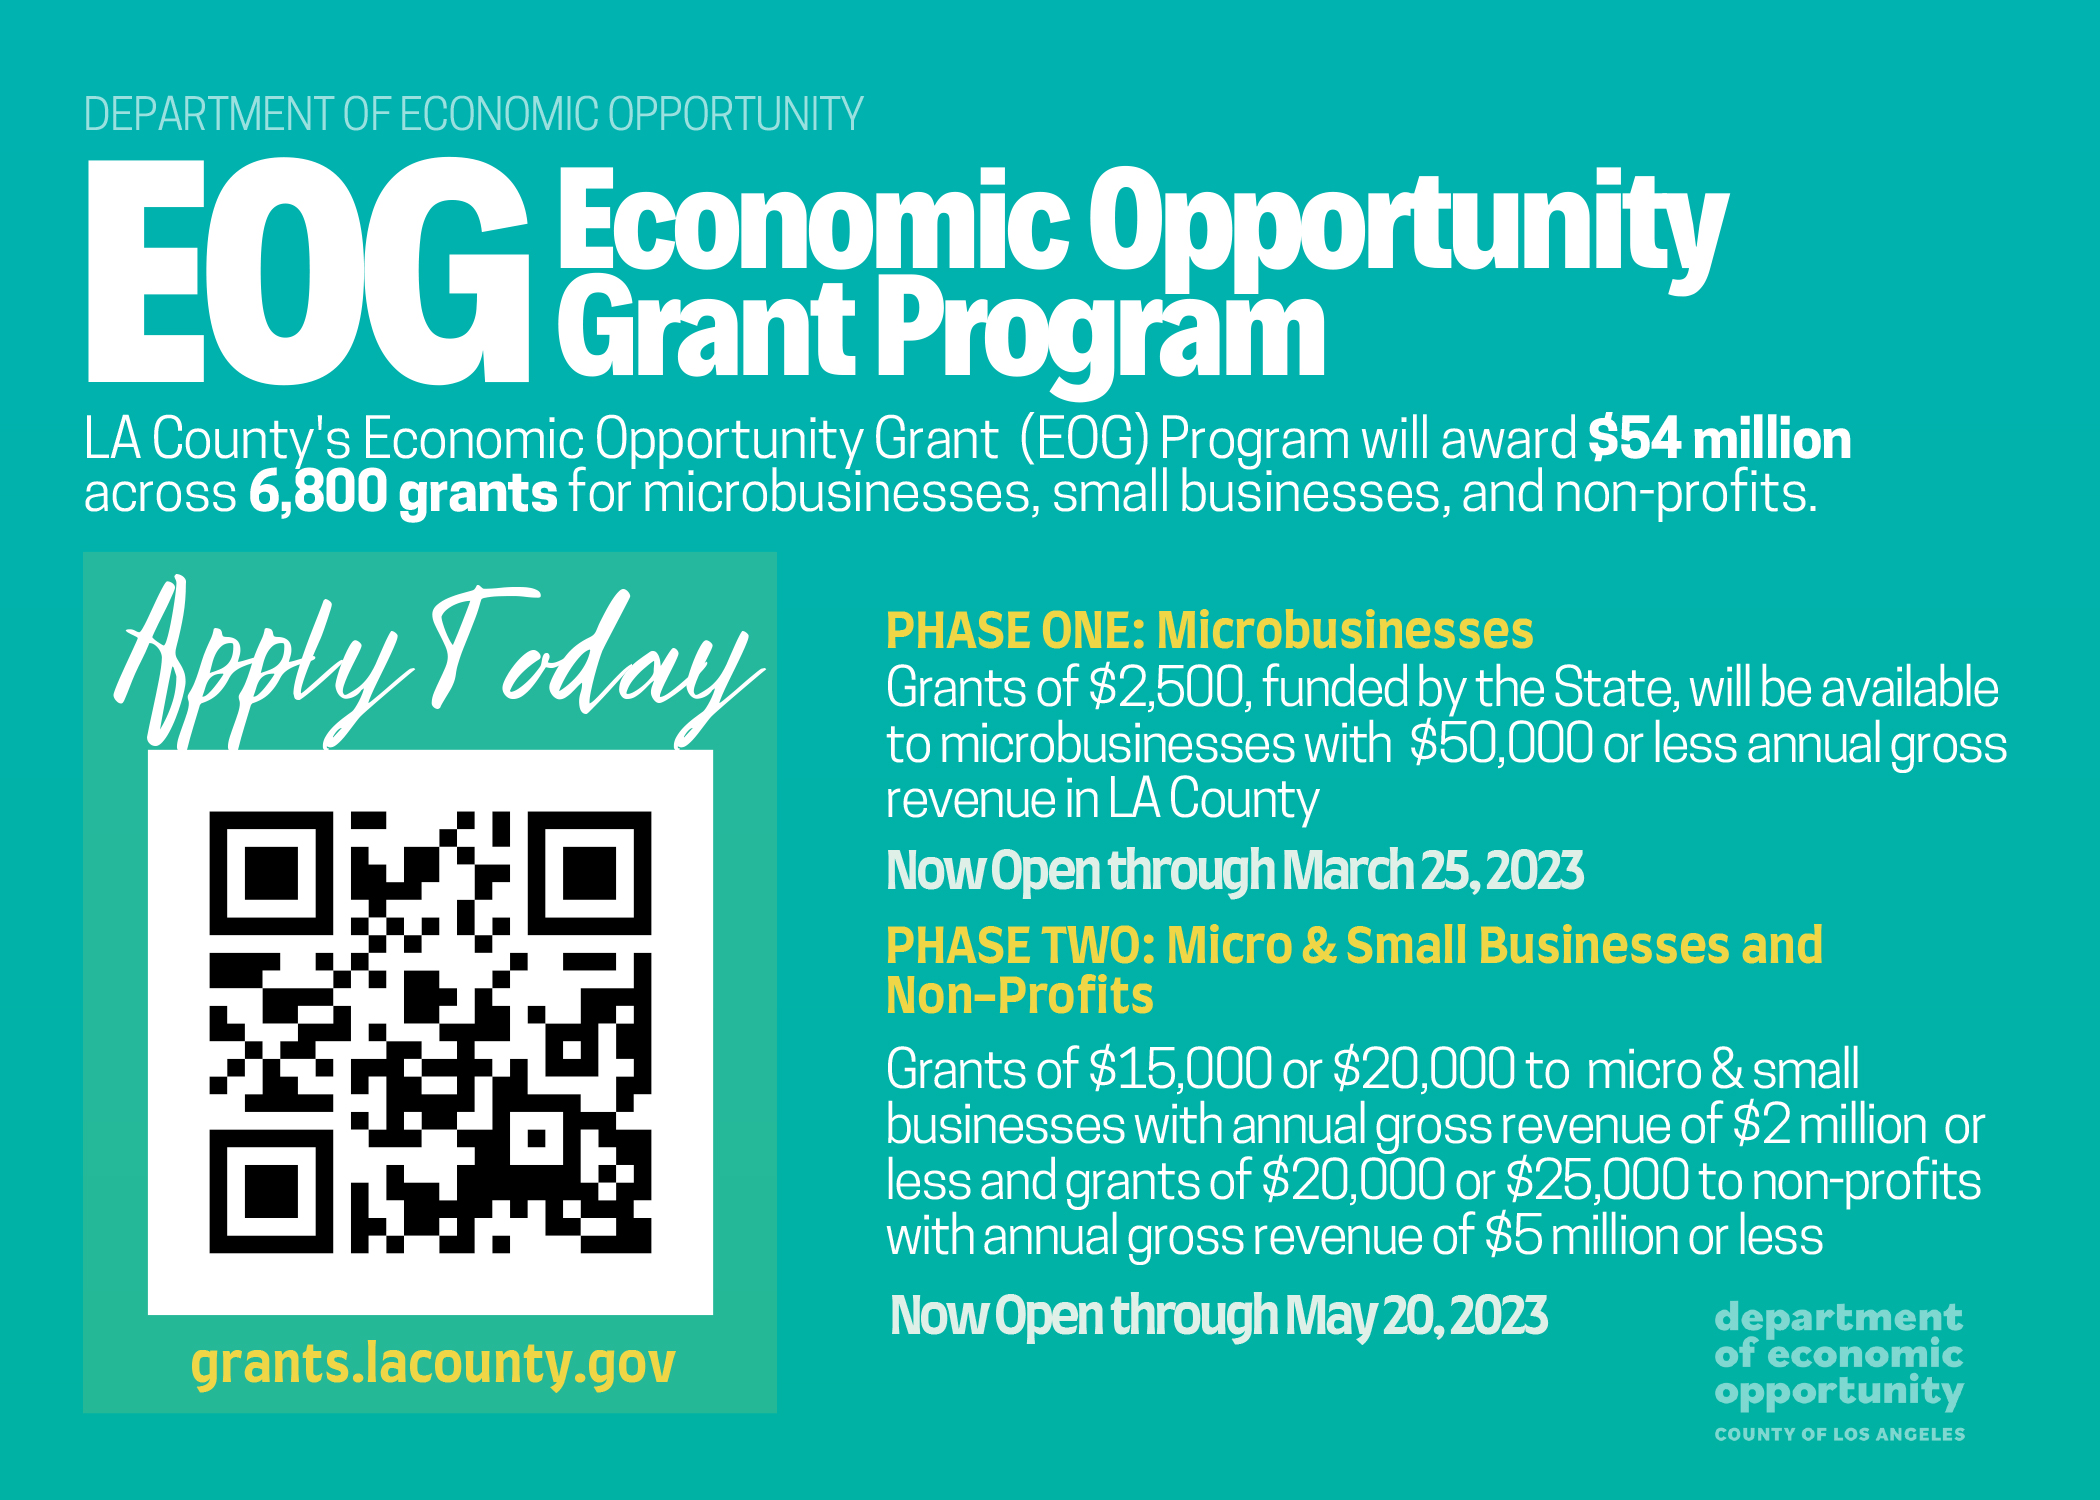 Economic Opportunity Grant Program information updated 